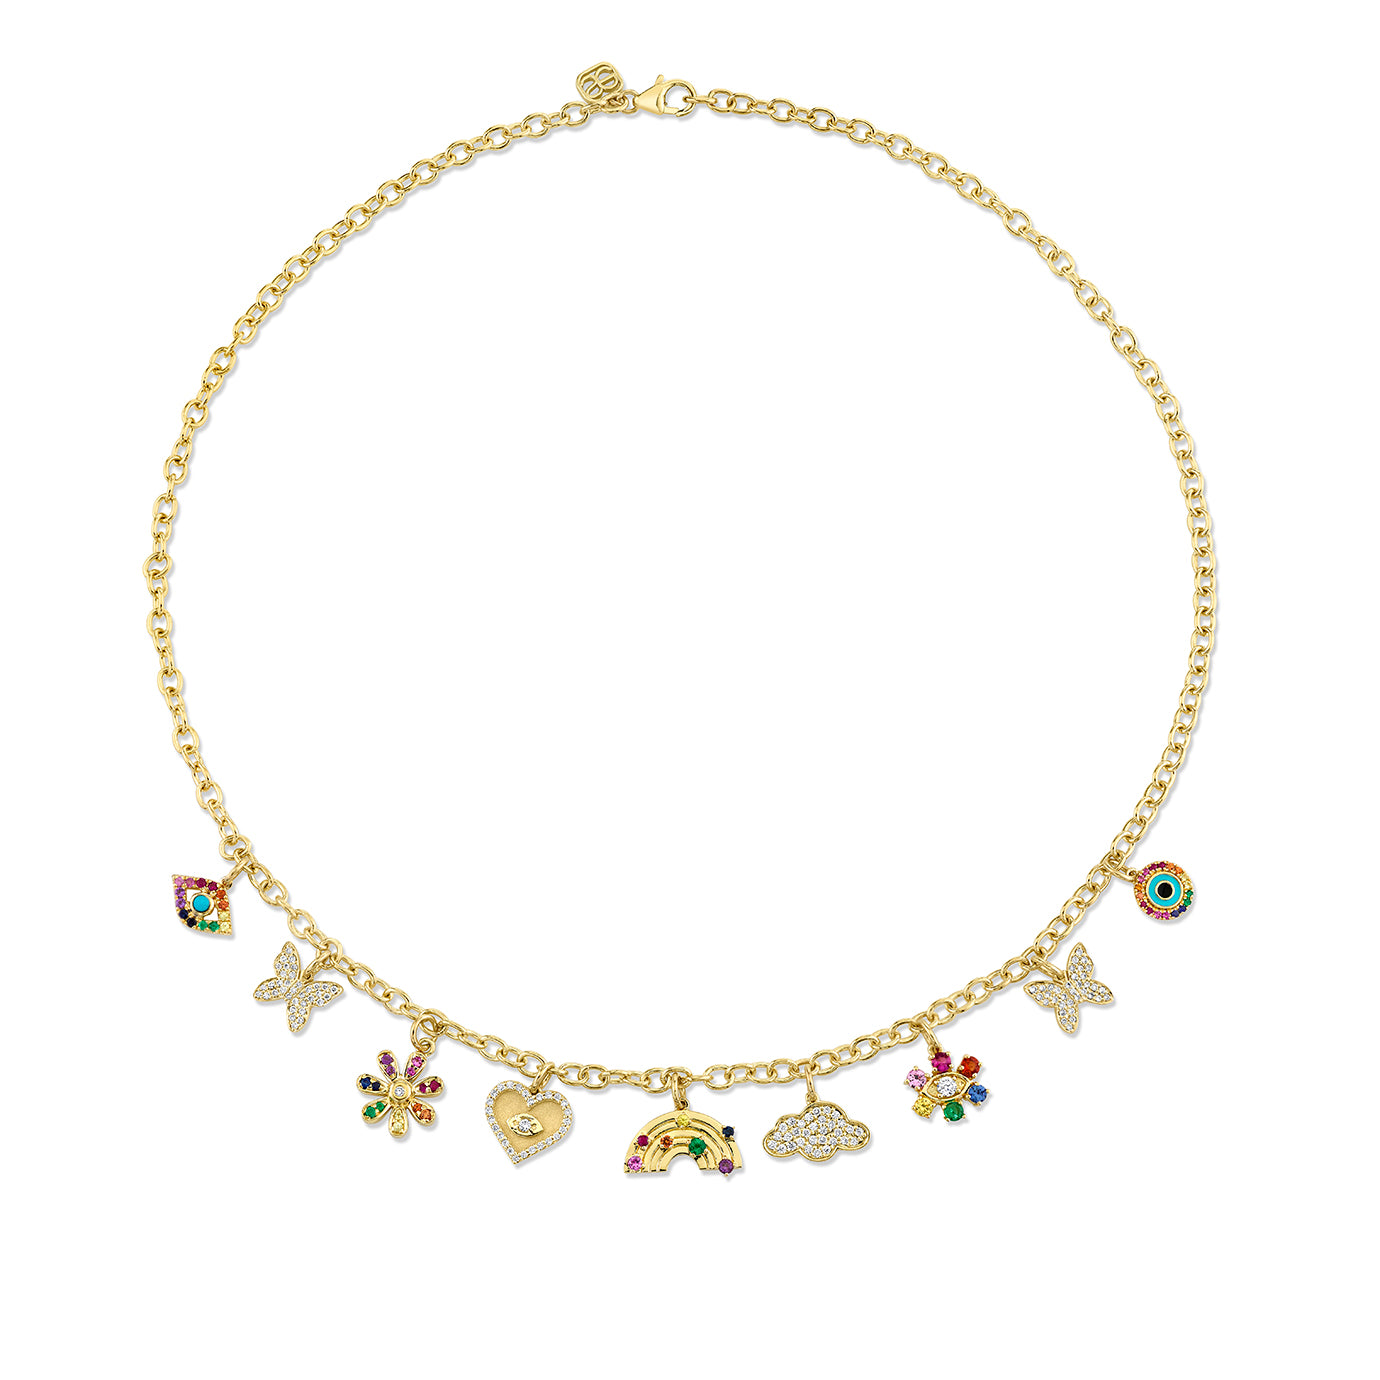 Louis Vuitton Rainbow Charms Necklace - Silver-Tone Metal Pendant